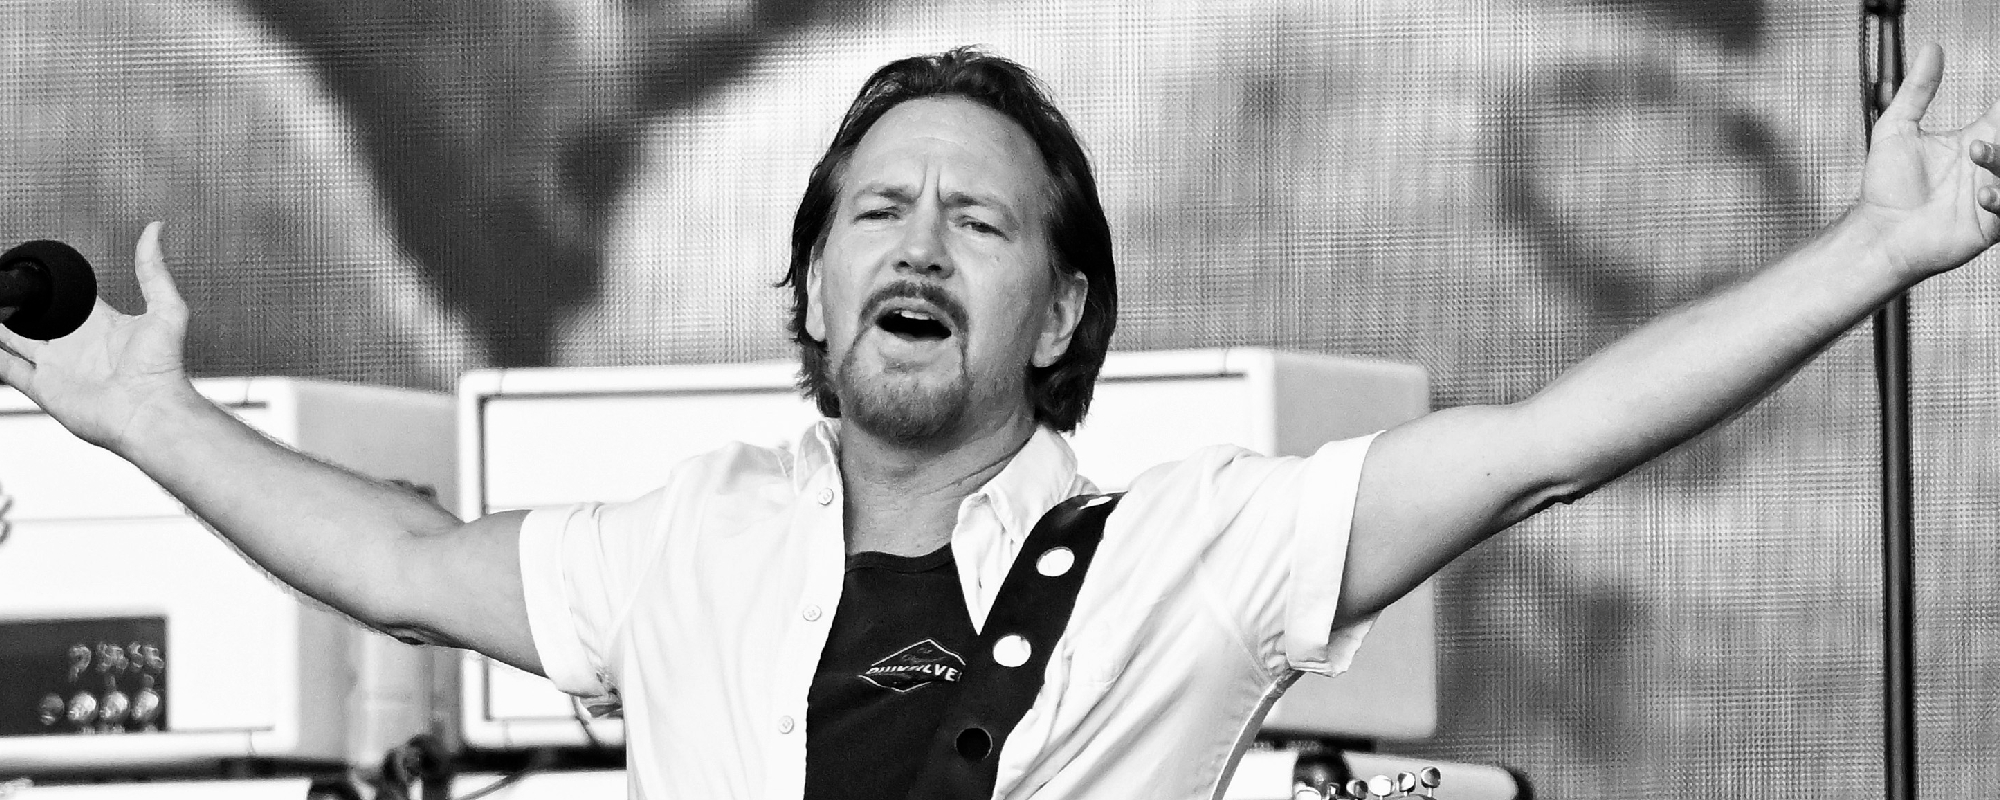 Pearl Jam’s Eddie Vedder Compares Taylor Swift Concert to “Punk Rock Crowds”